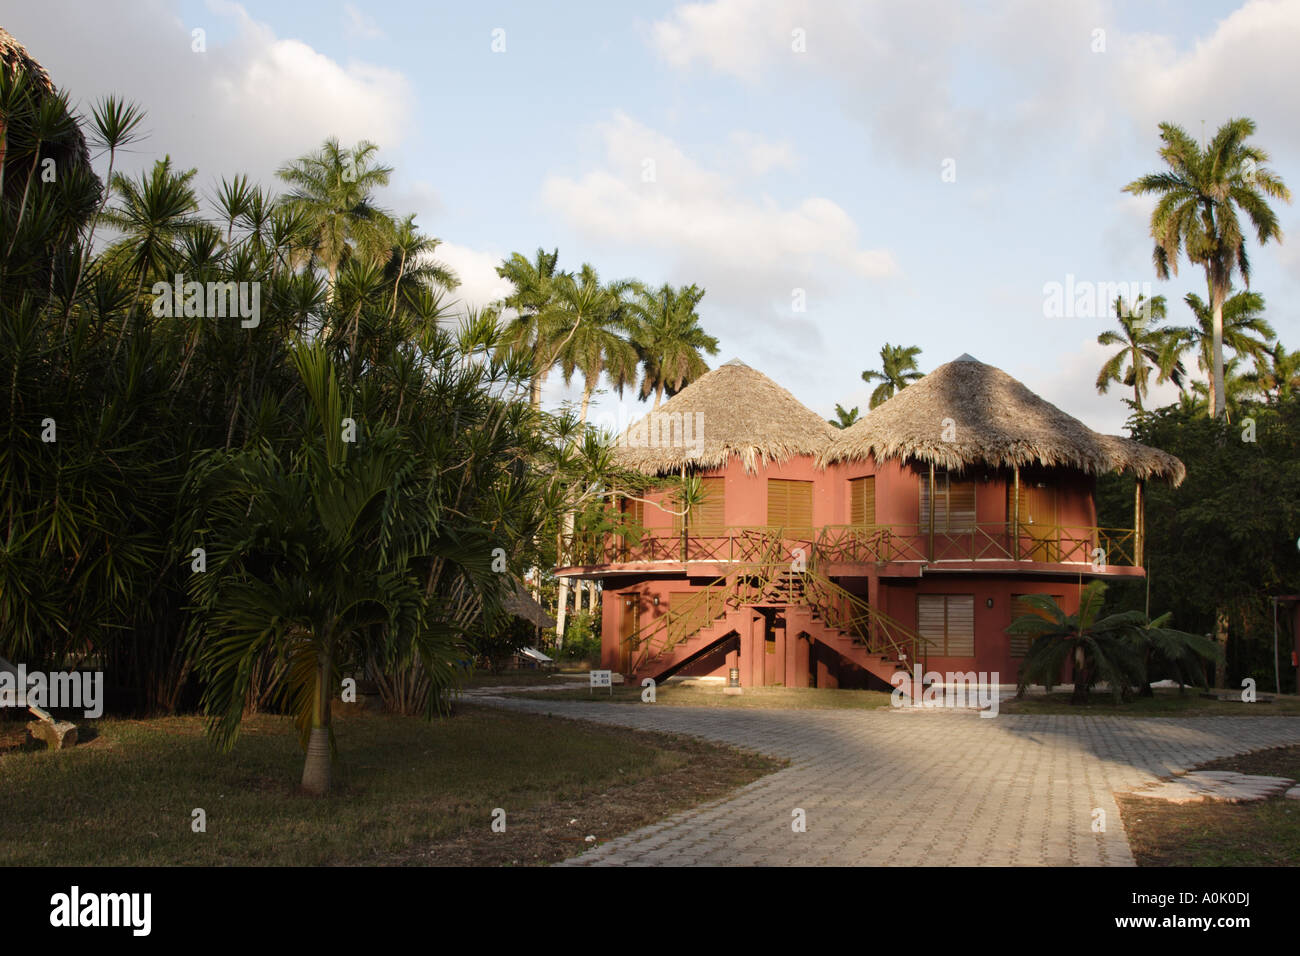 Guest Rooms at La Granjita Santa Clara Cuba are in two storey thatched cabins Stock Photo